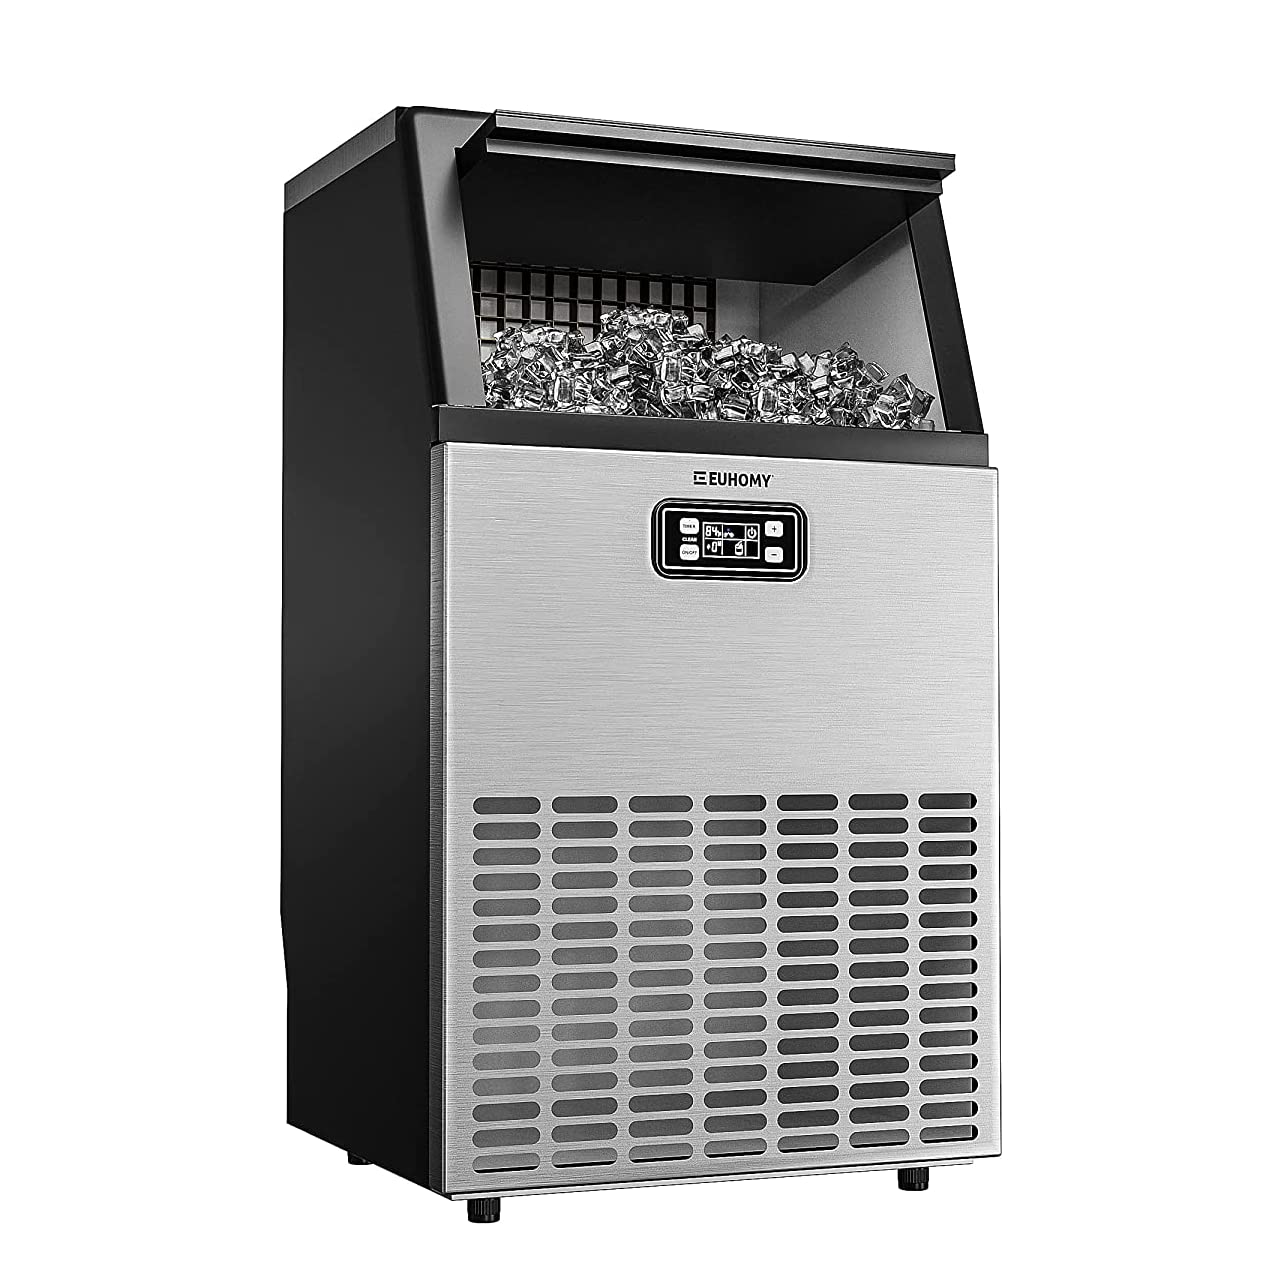 Commercial 76kg Cube Ice Maker Machine Built-in Restaurant Bar Stainless Steel 